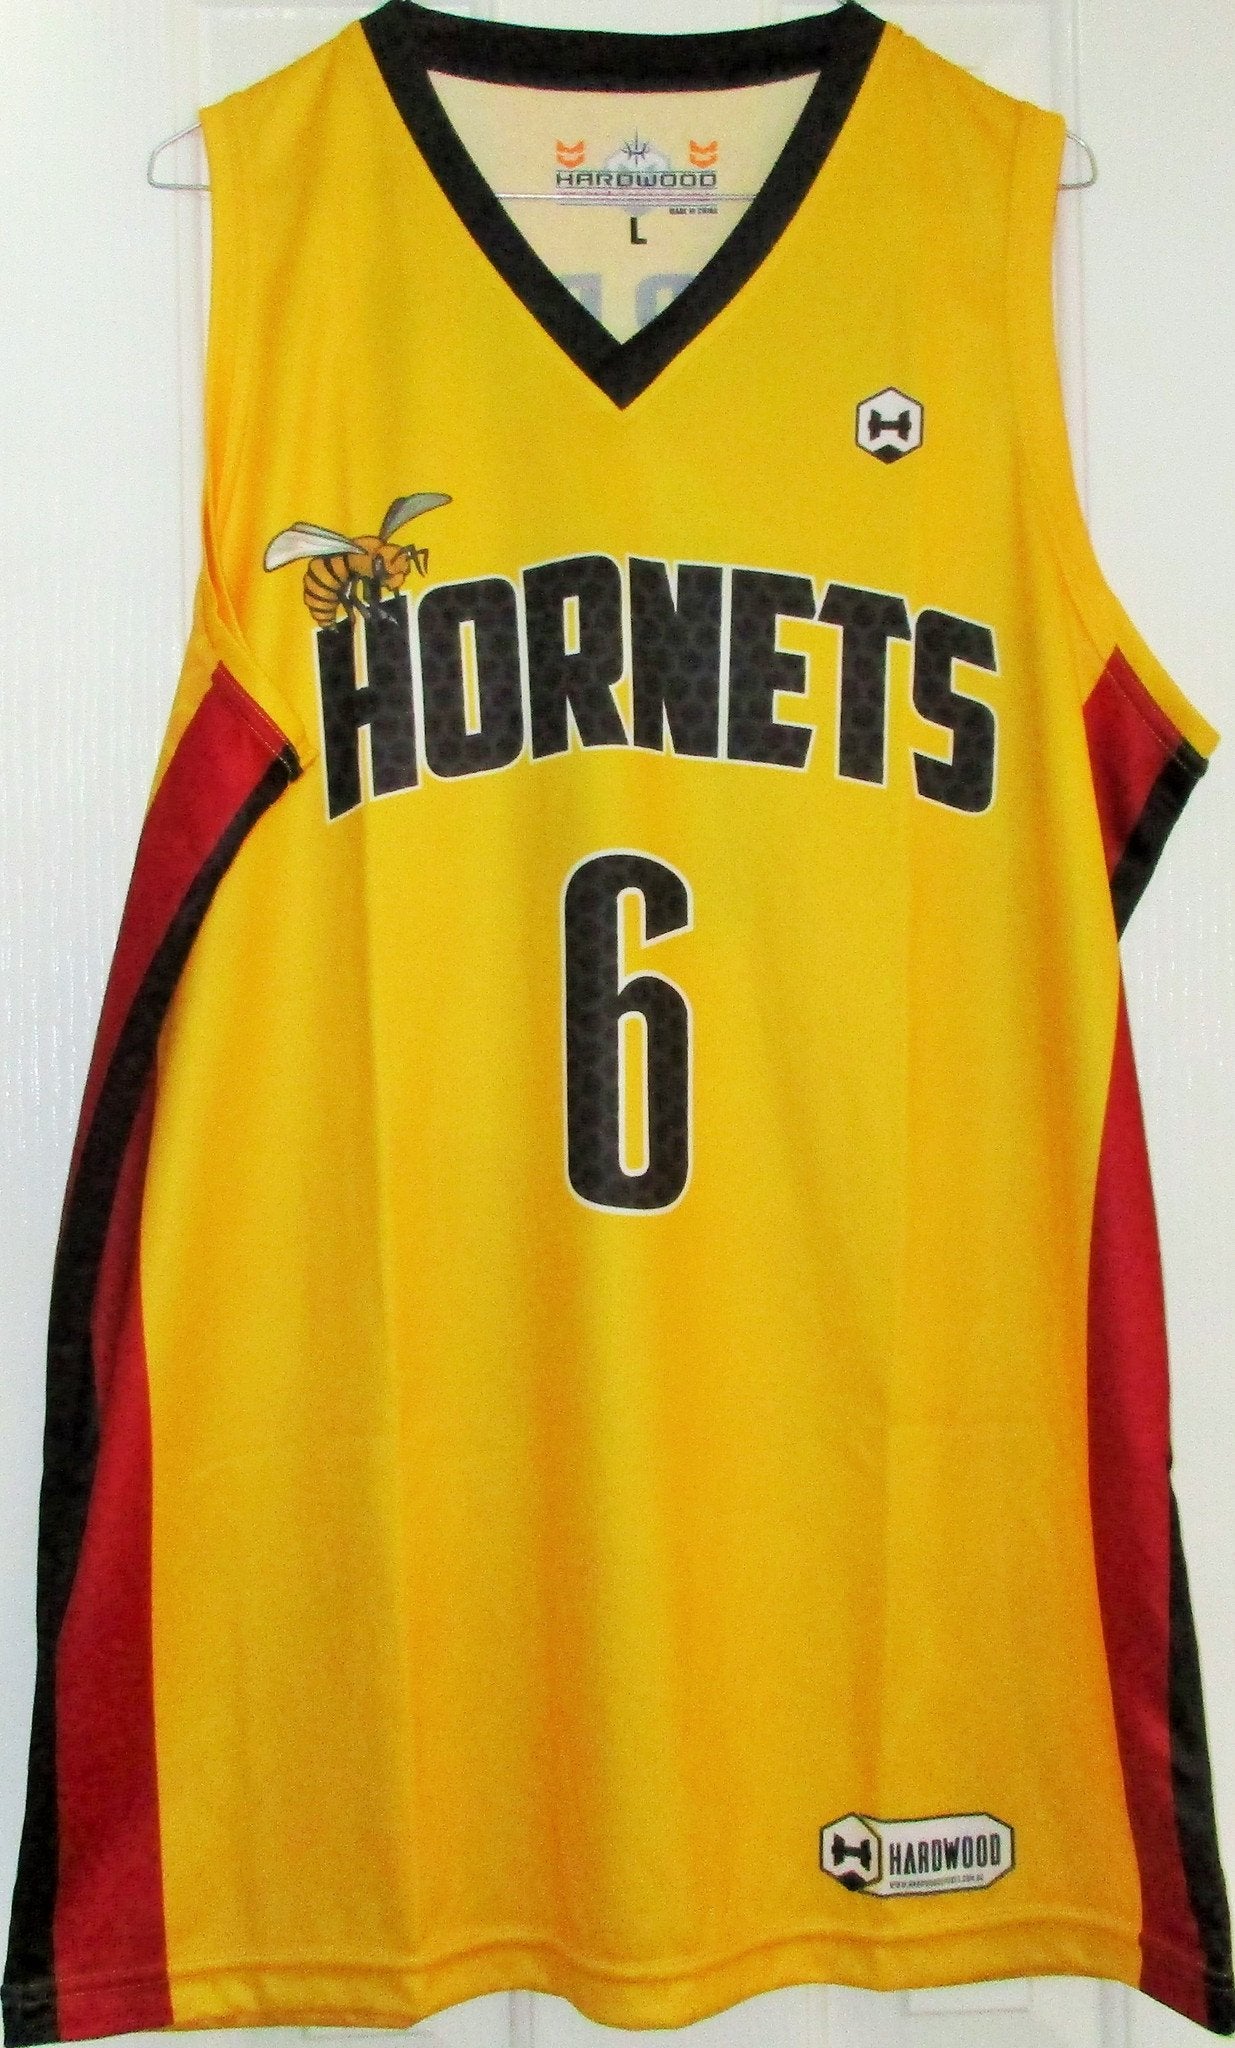 Hornets Basketball Uniform Set